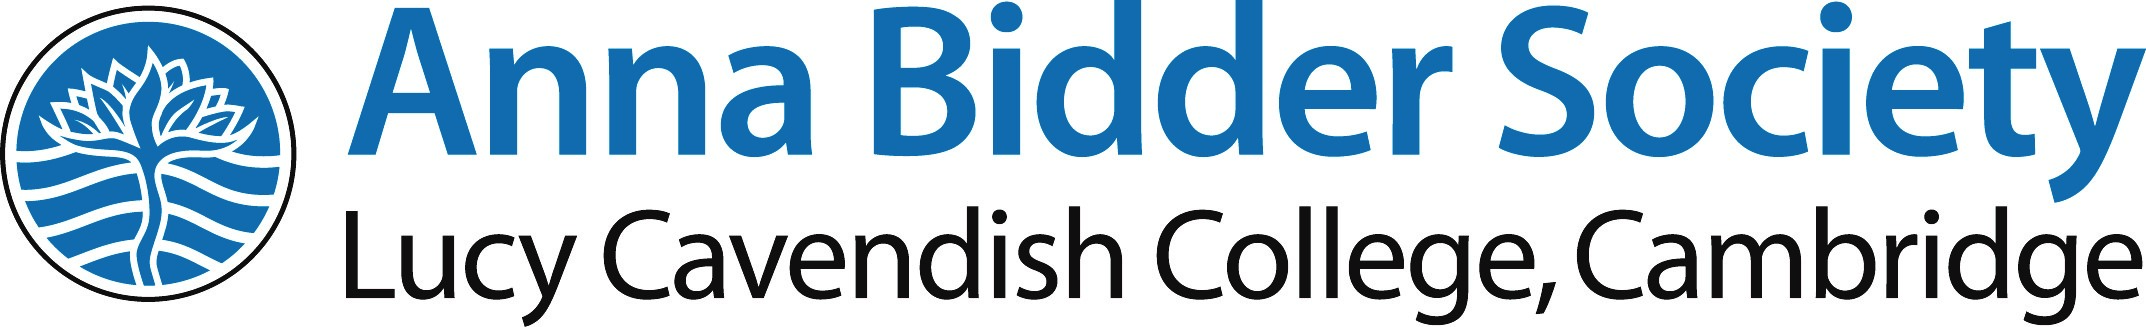 Anna Bidder Society Logo